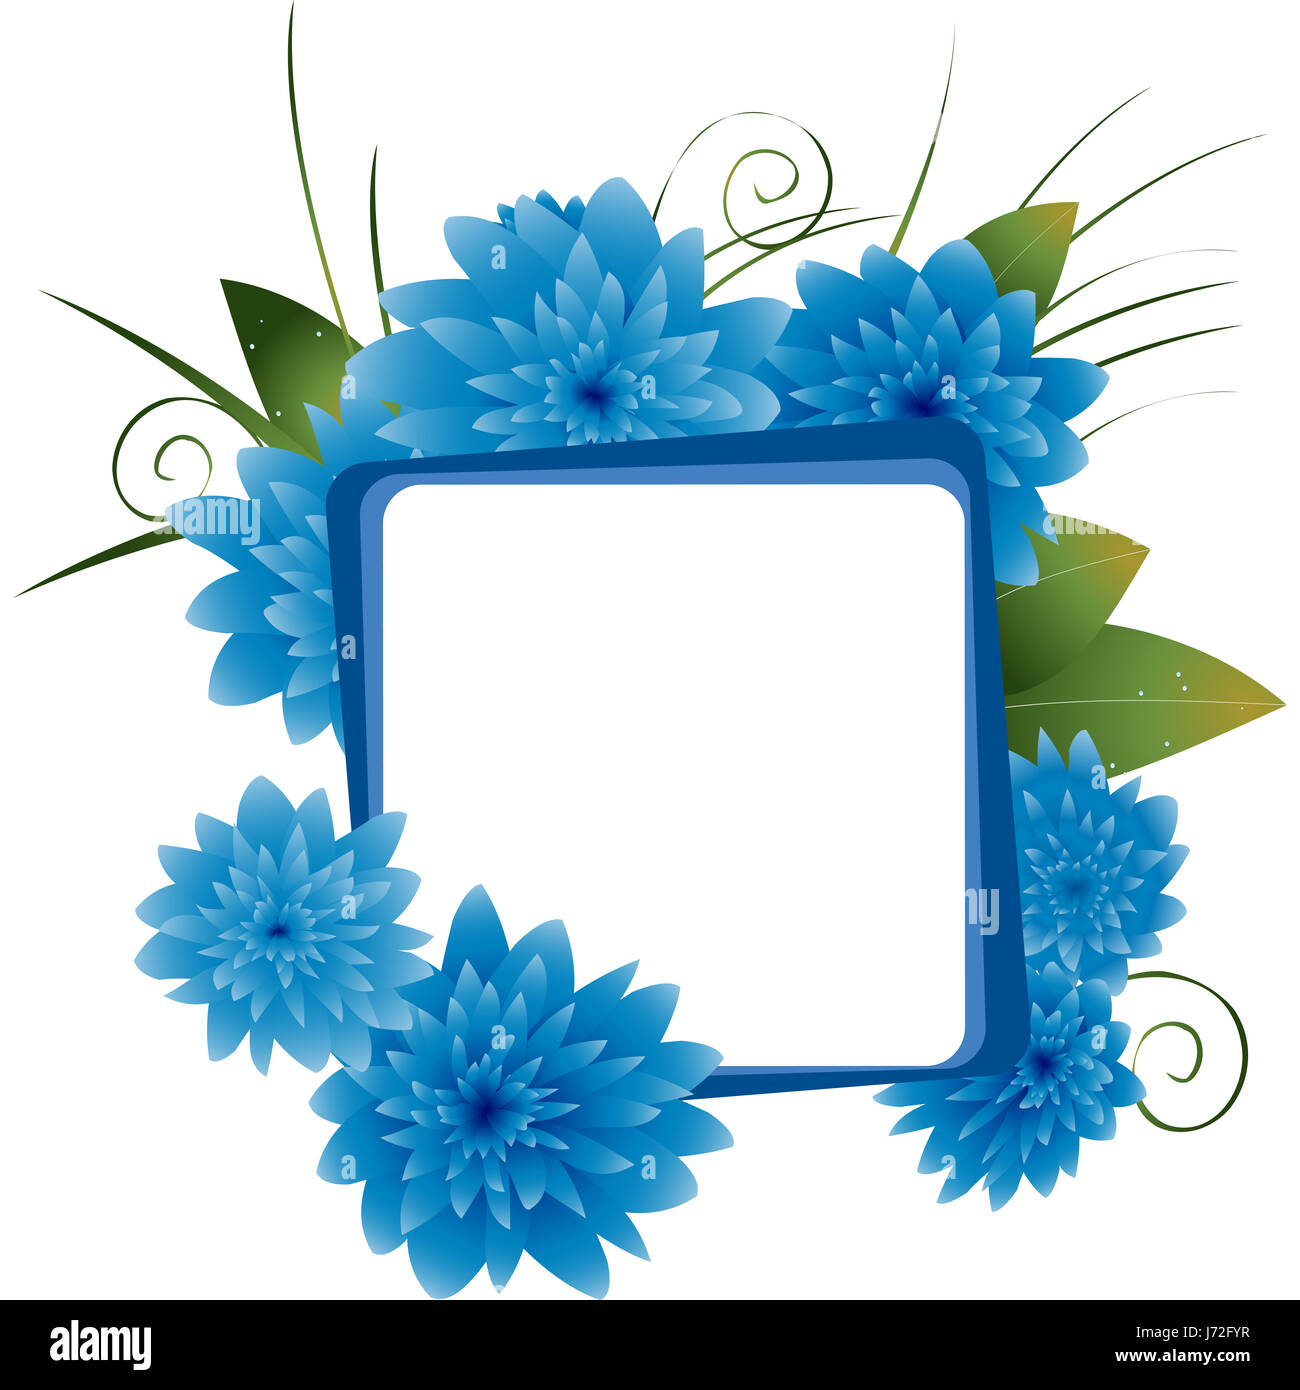 leaf art flower plant decor decoration artistic floral design blue leaf art Stock Photo